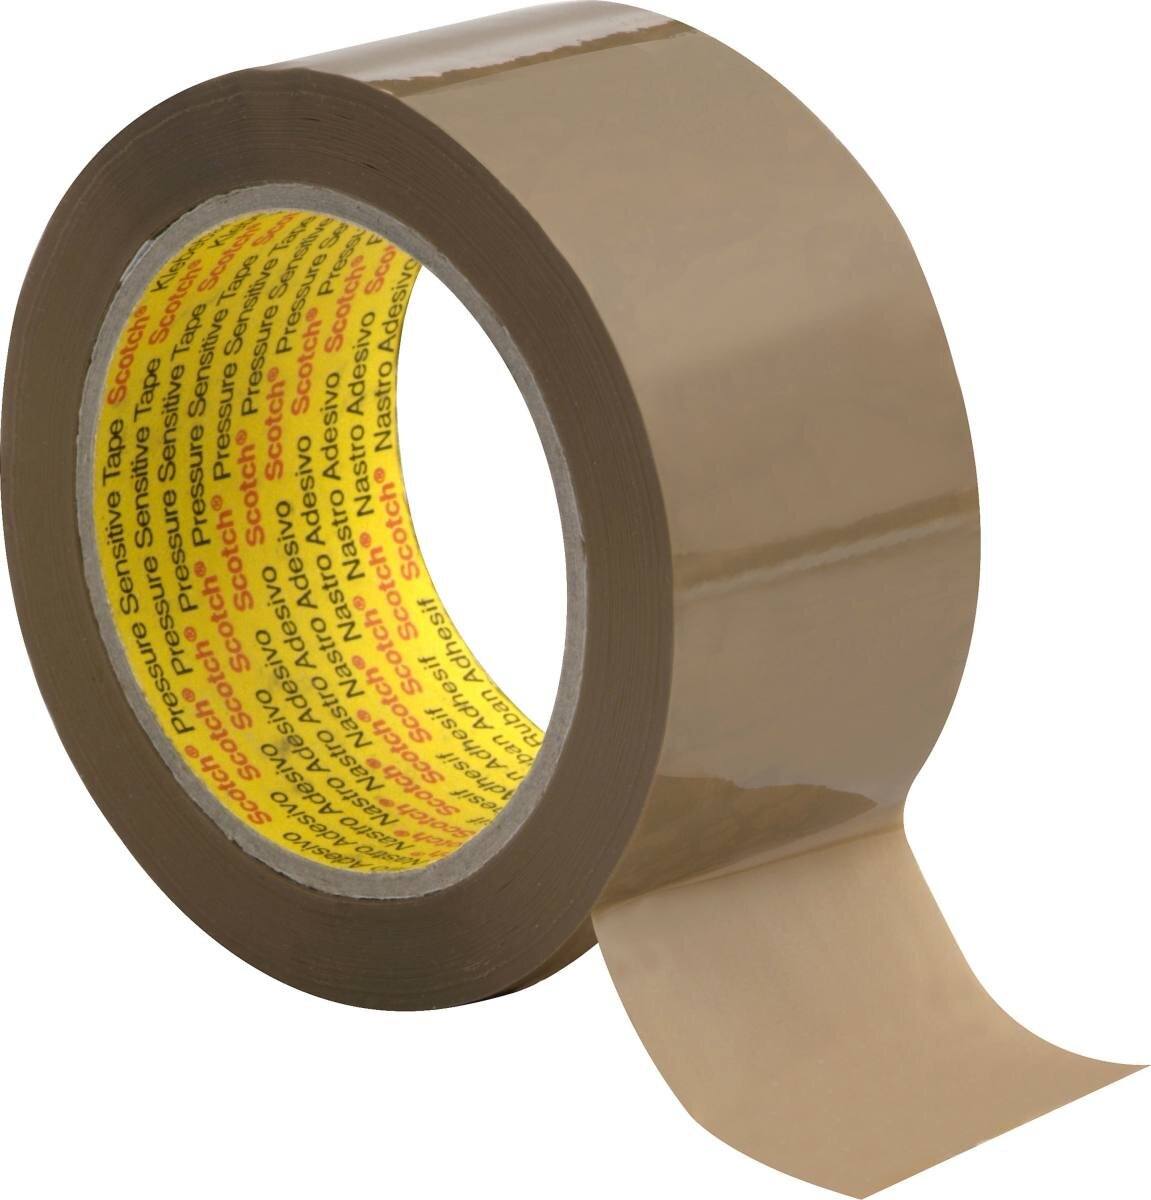 3M Scotch packaging tape 3739, brown, 50 mm x 990 m, 0.056 mm